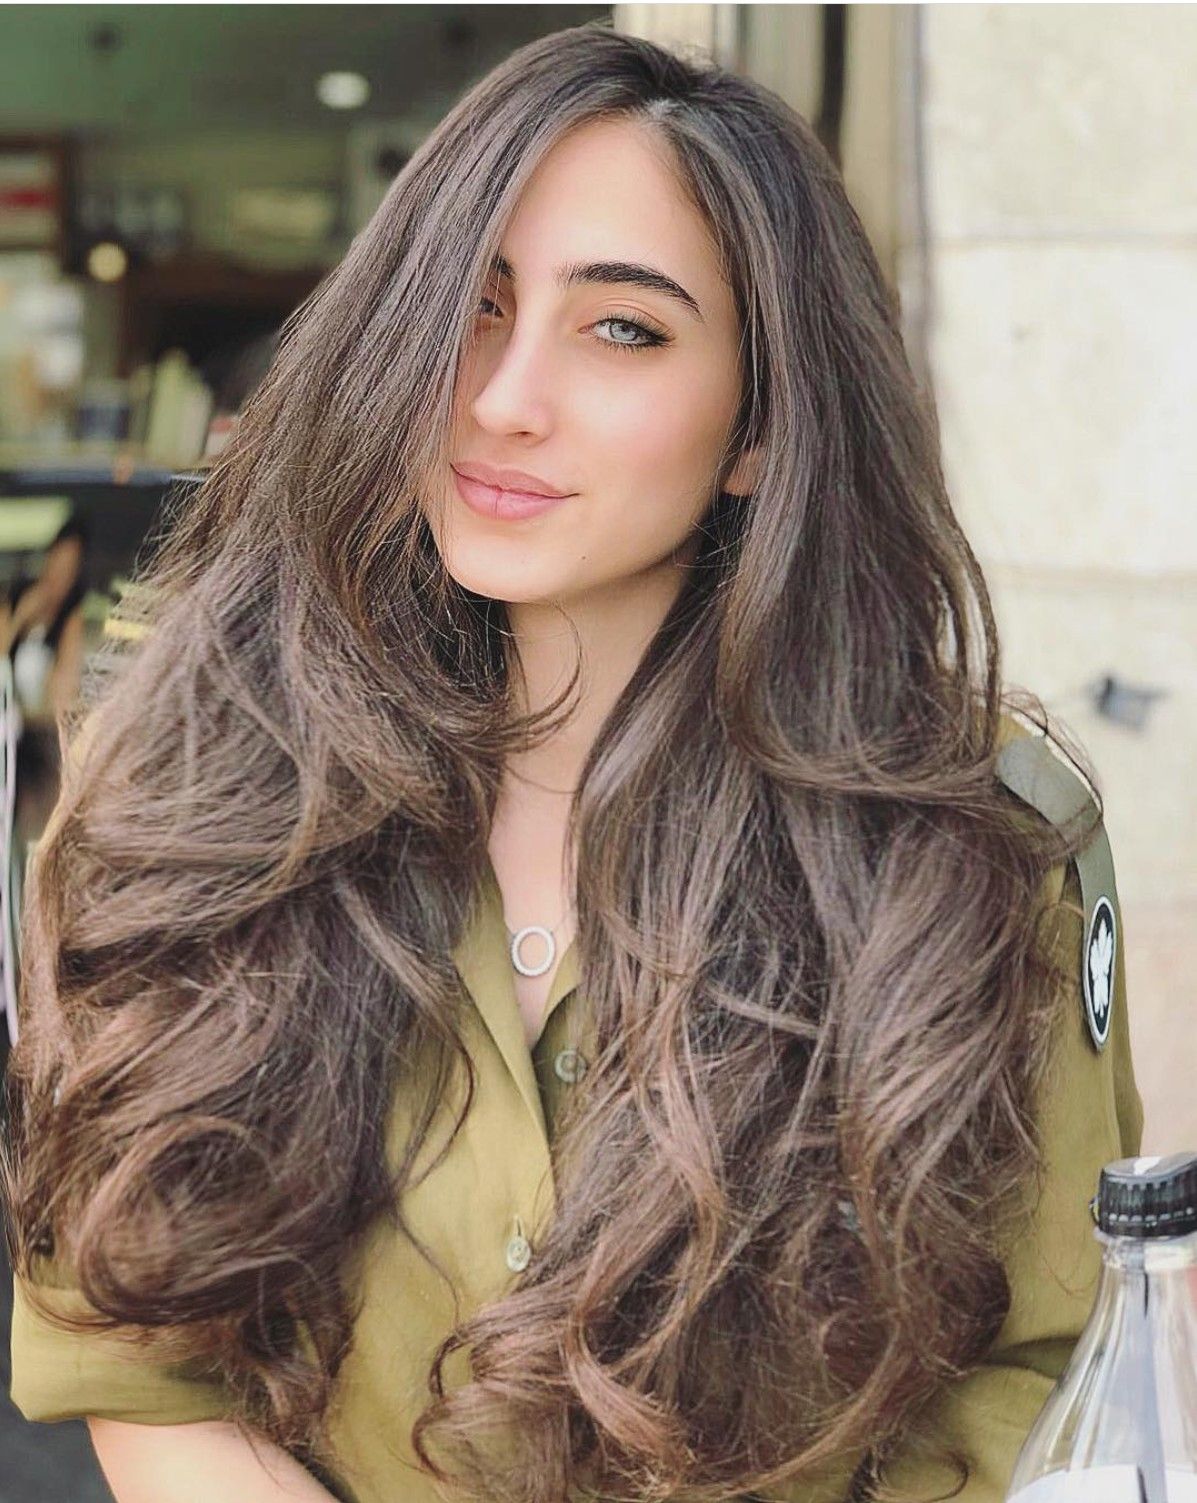 Israeli videos naughty israelian gals loving every